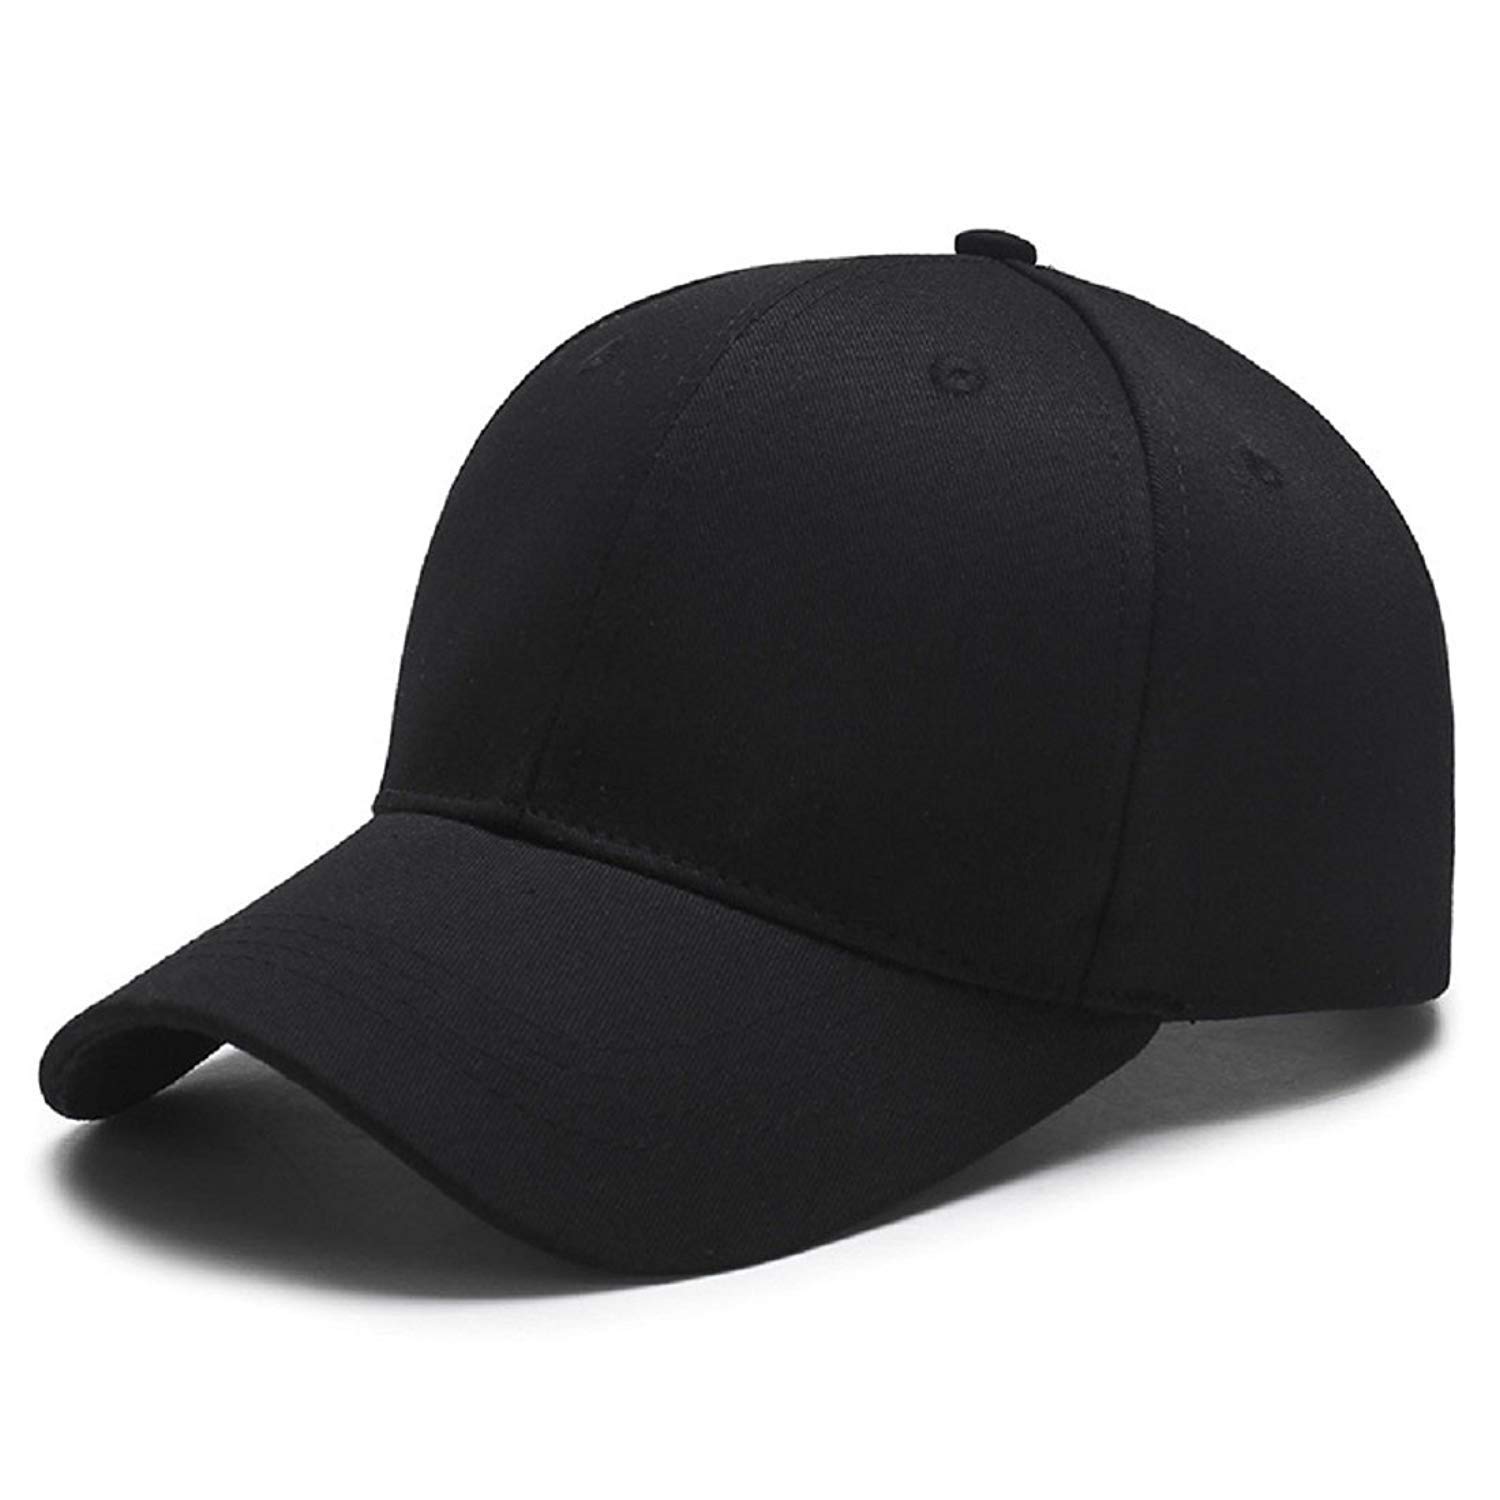 Classic Cap Cotton Sports Caps For Men/Women / Baseball Summer Caps